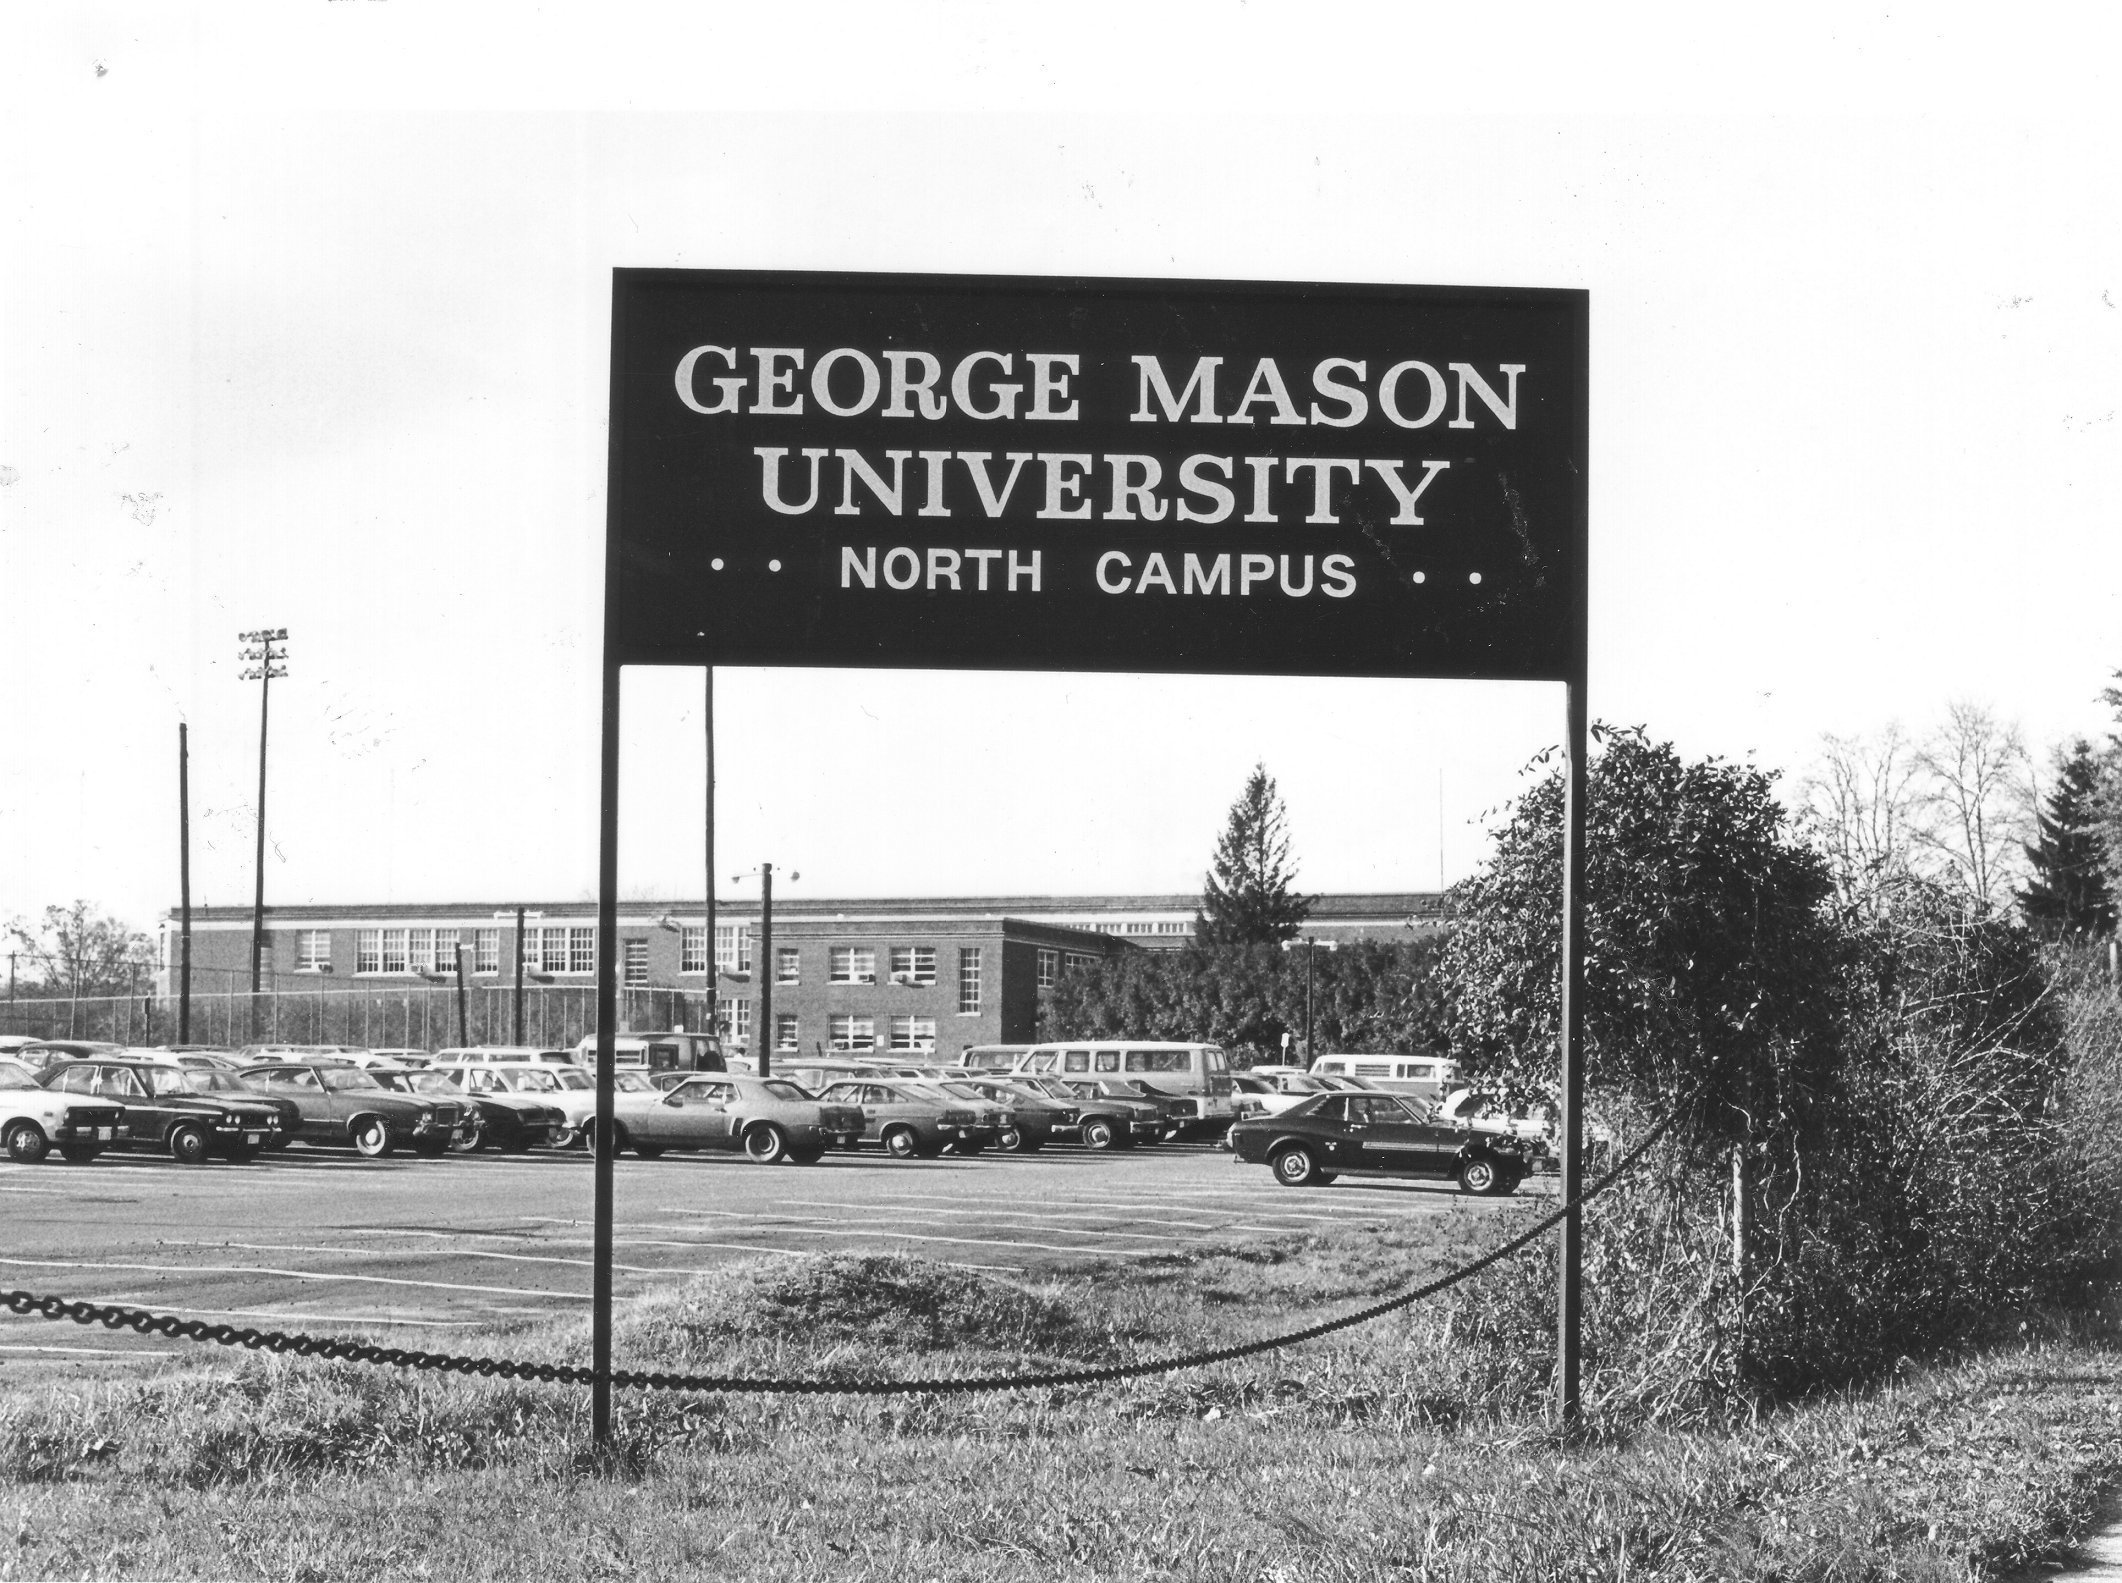 George Mason University North Campus sign